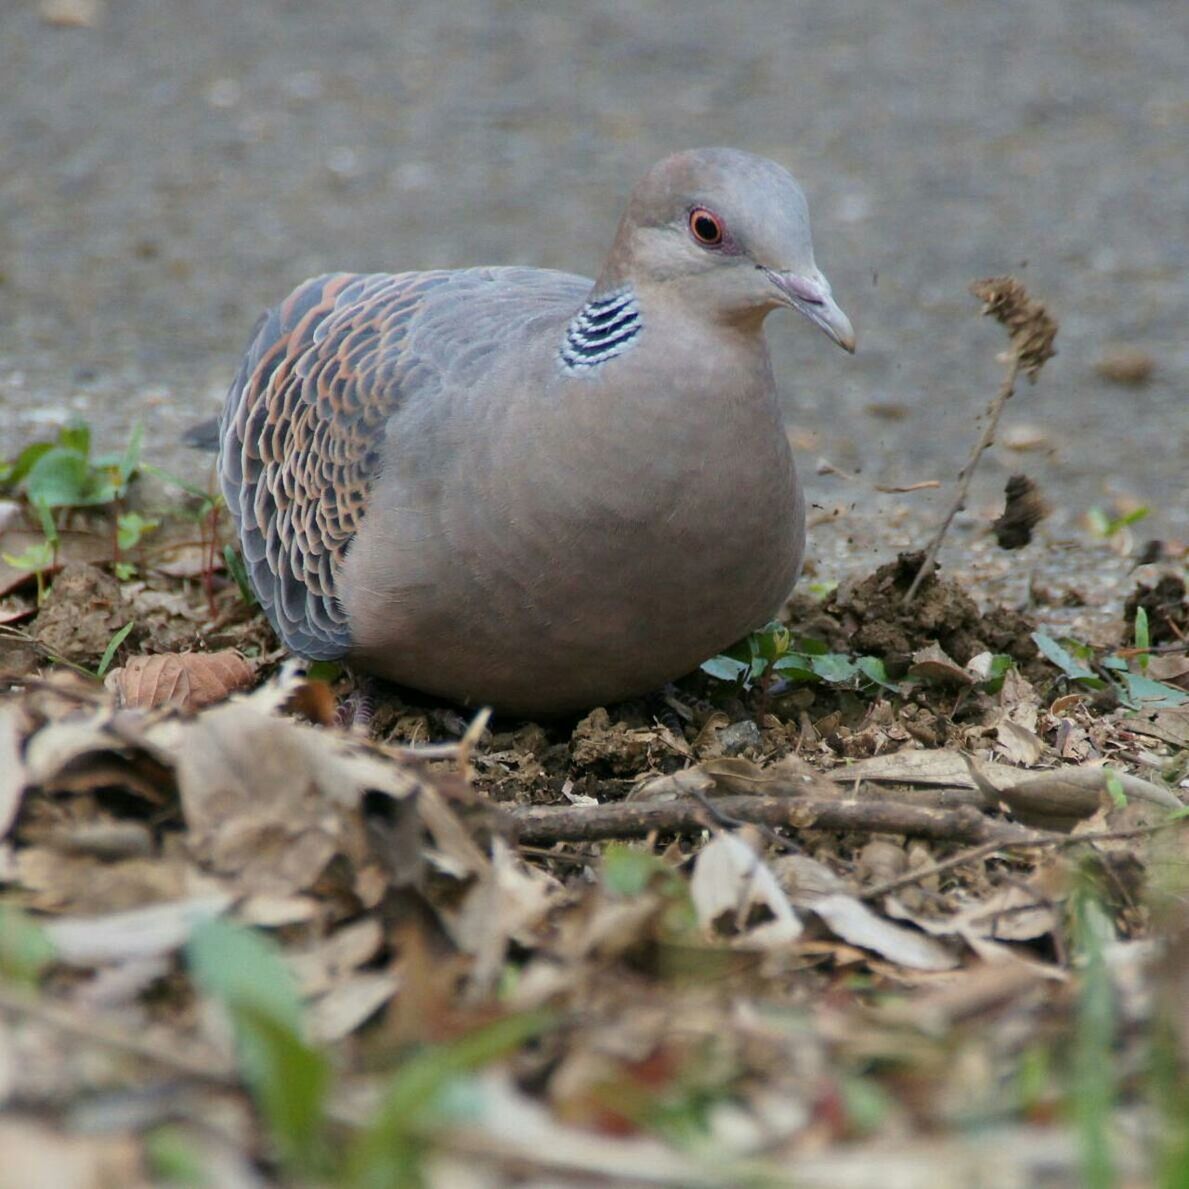 Close-up of a bird on ground